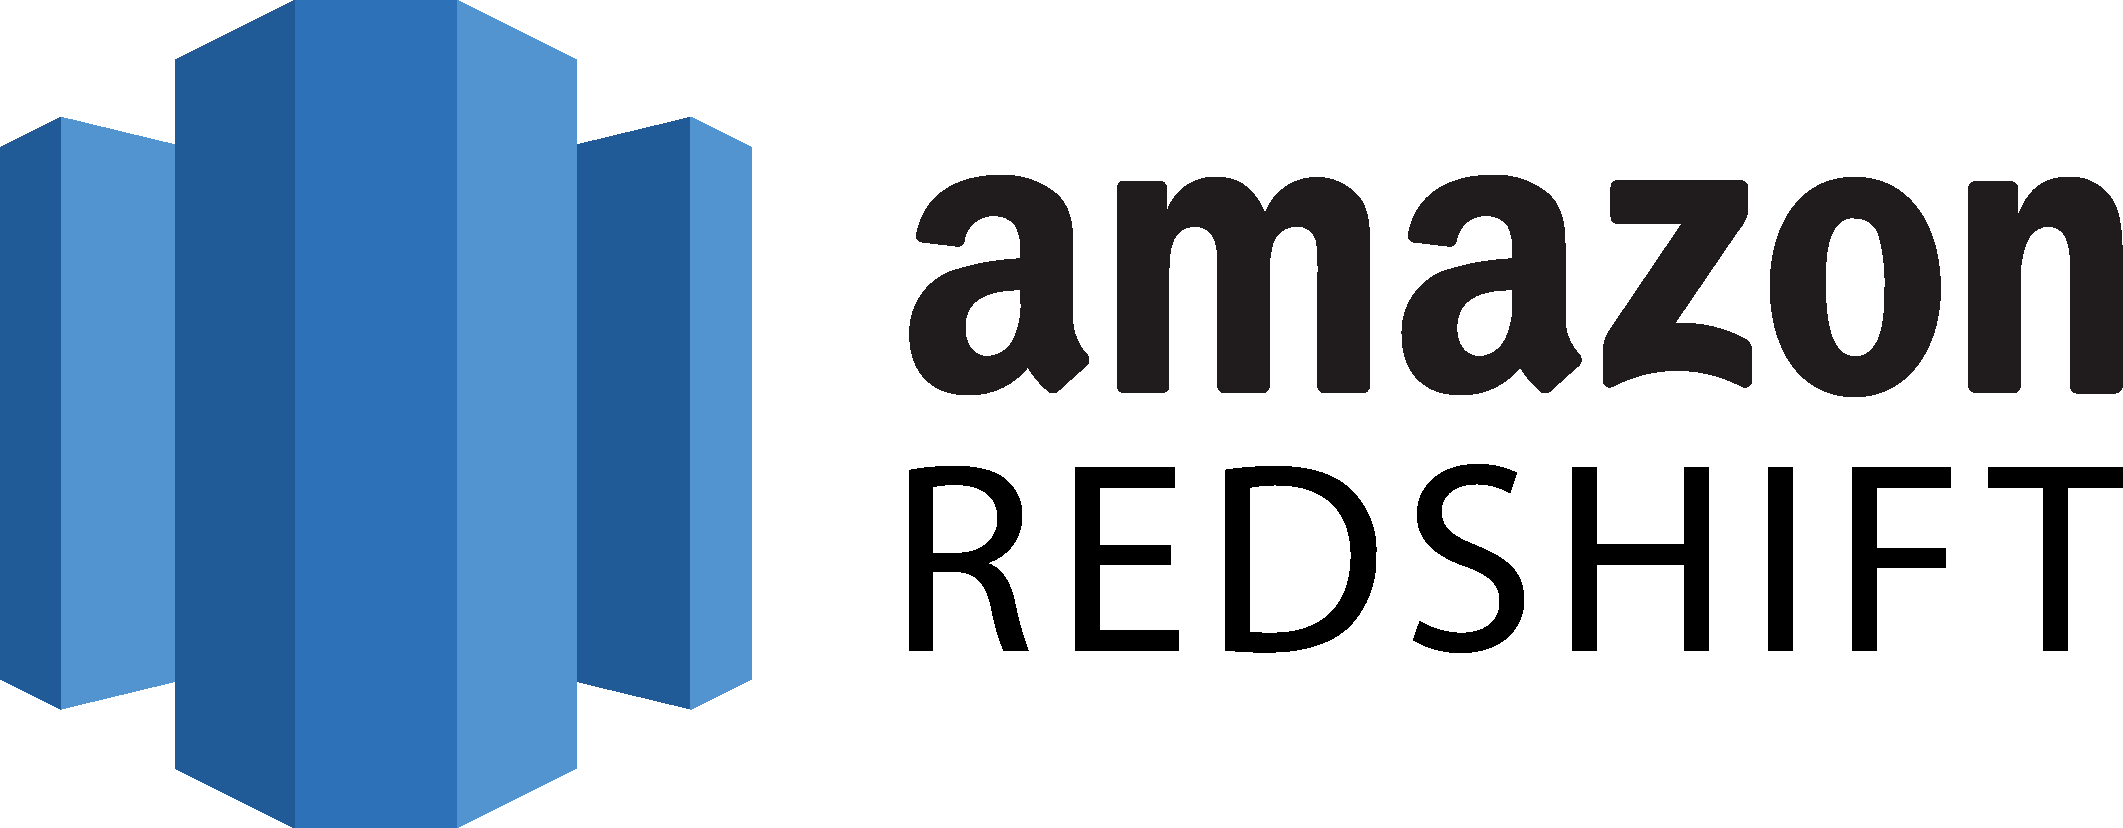 excel to redshift: amazon redshift logo